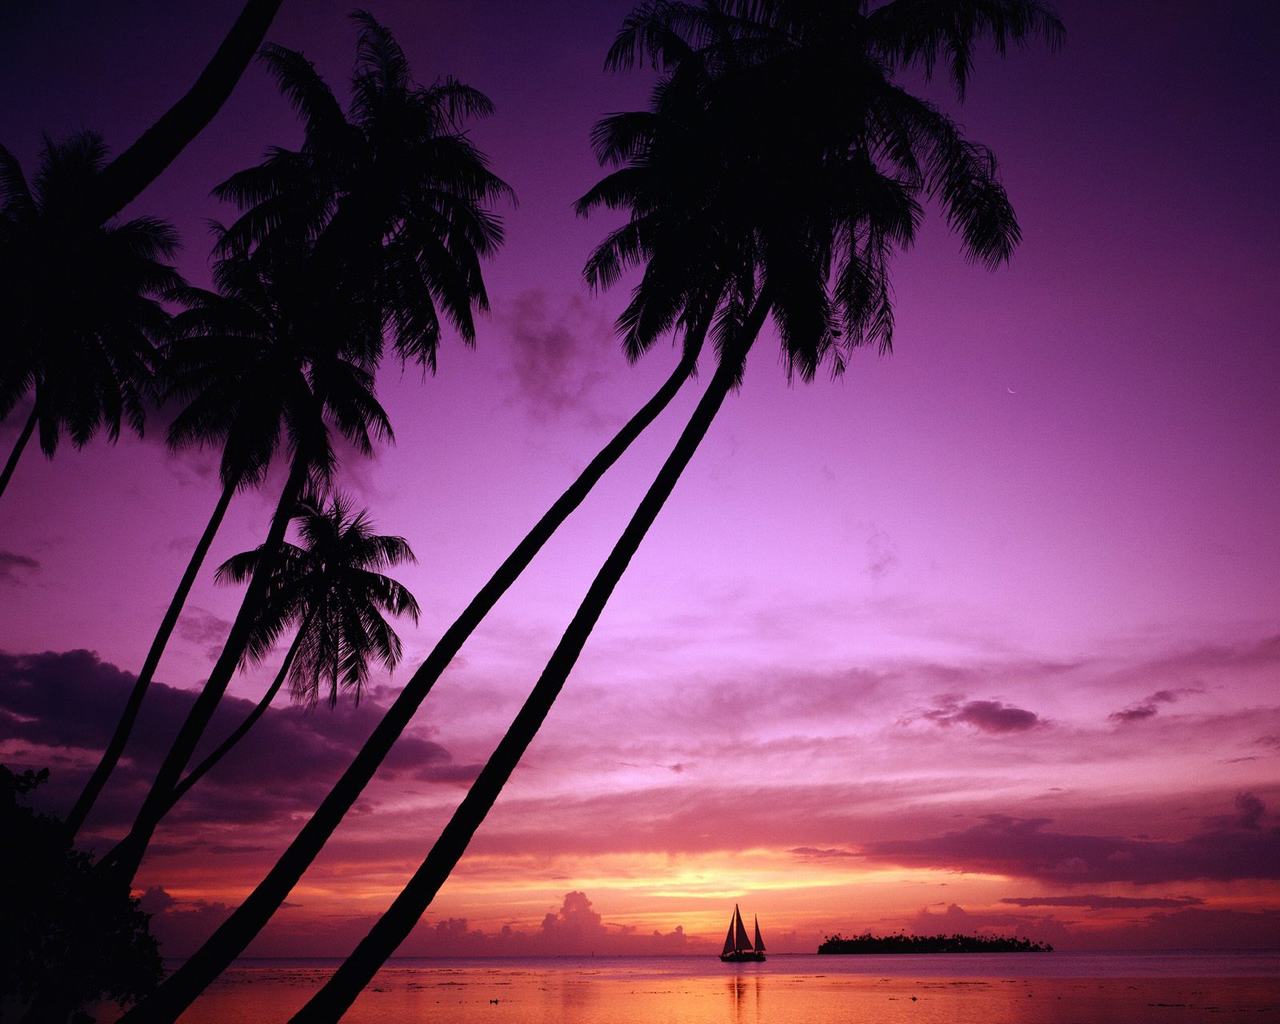  1280x1024 tropical island beach scenery amazing sunset wallpaper 1280x1024